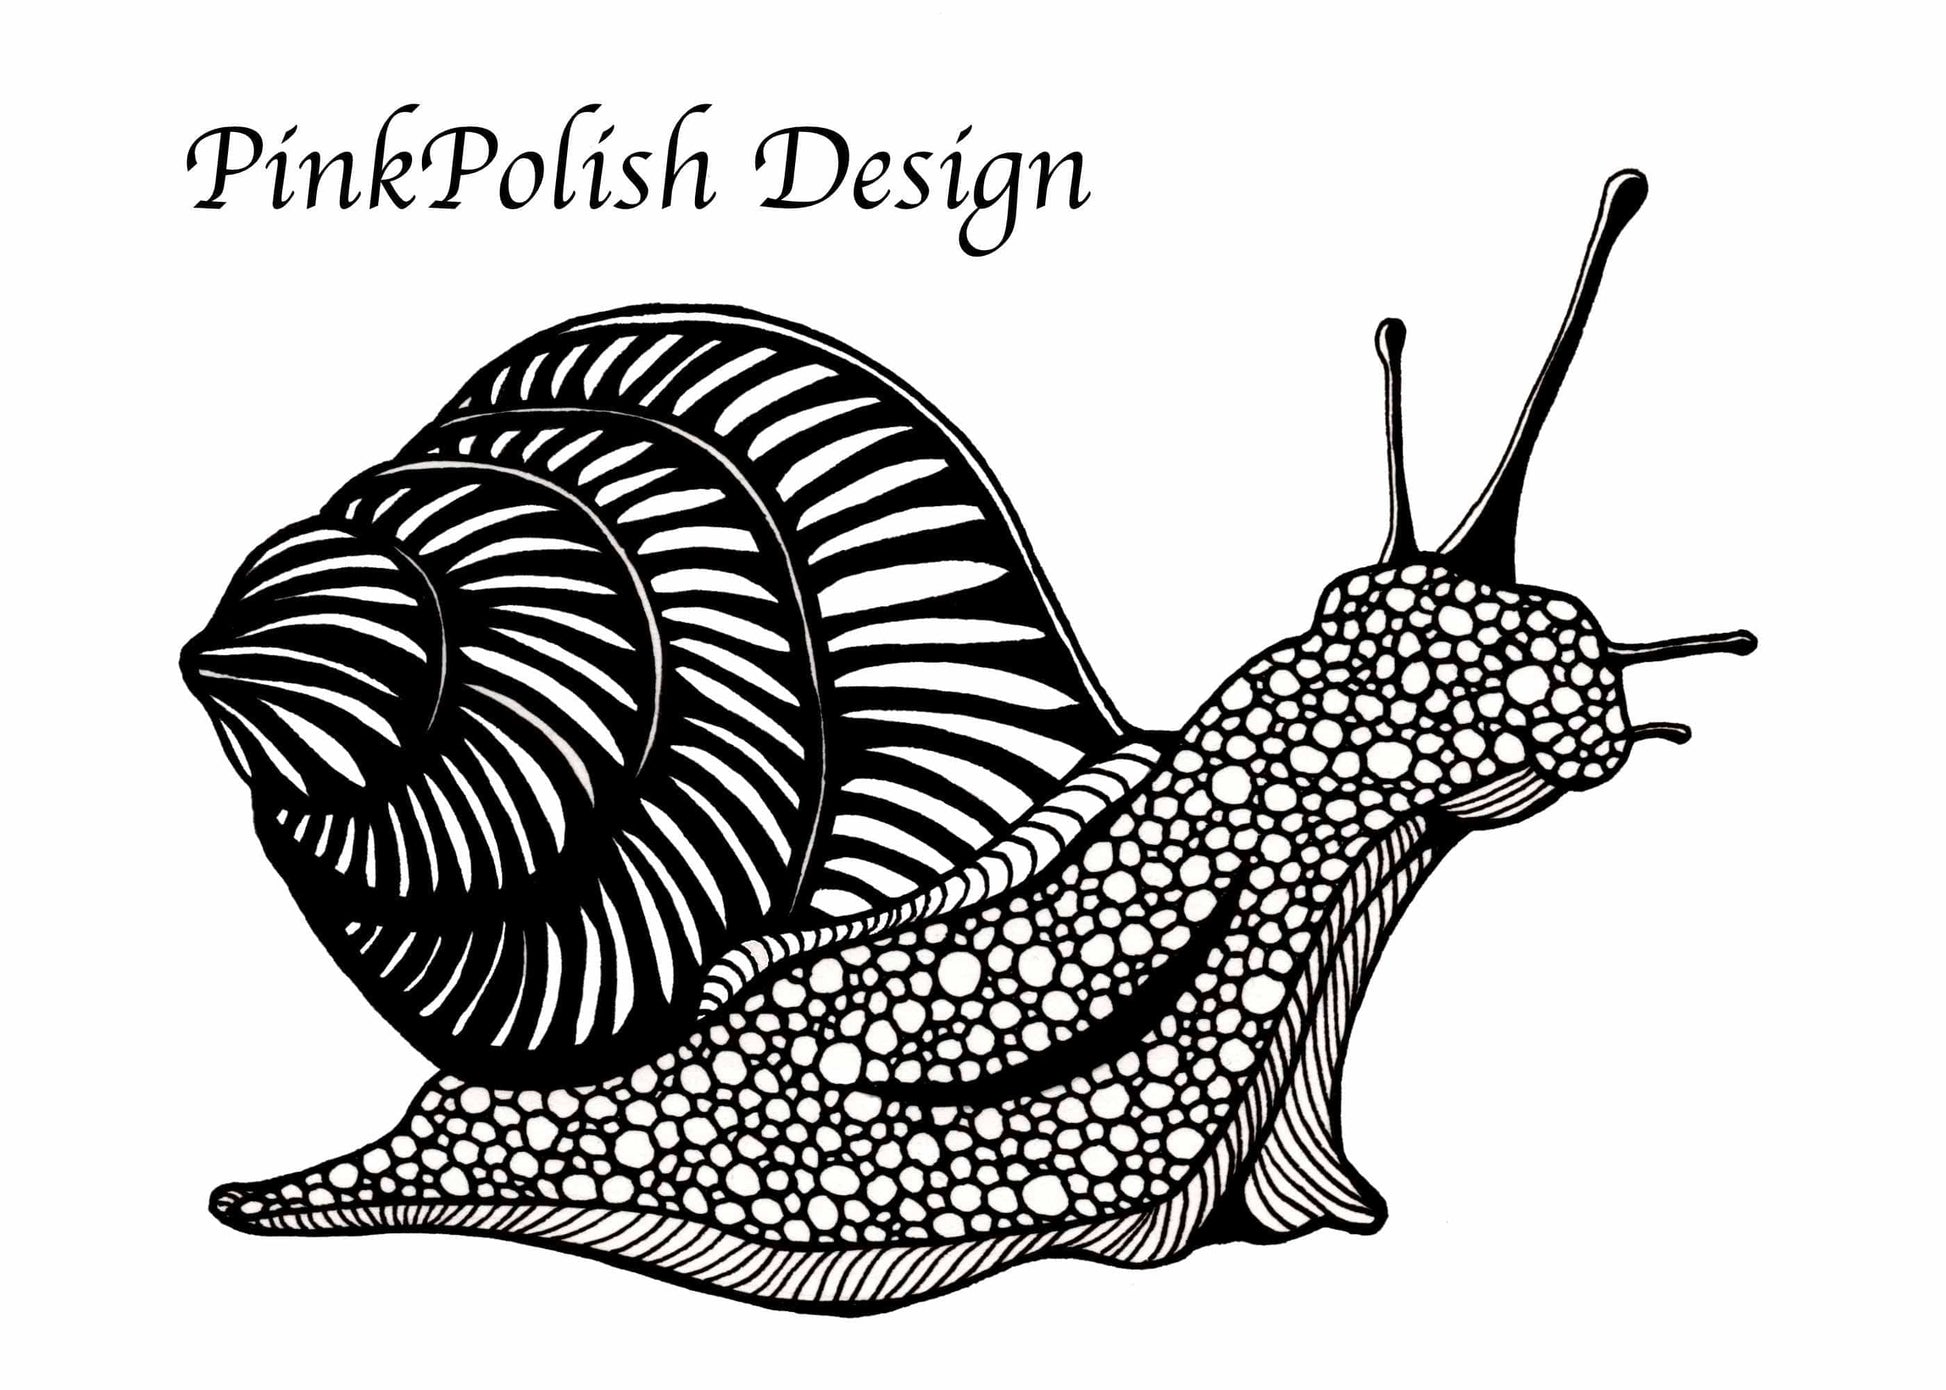 PinkPolish Design Art Prints "Snail's Pace, Ink"  Ink Drawing: Art Print